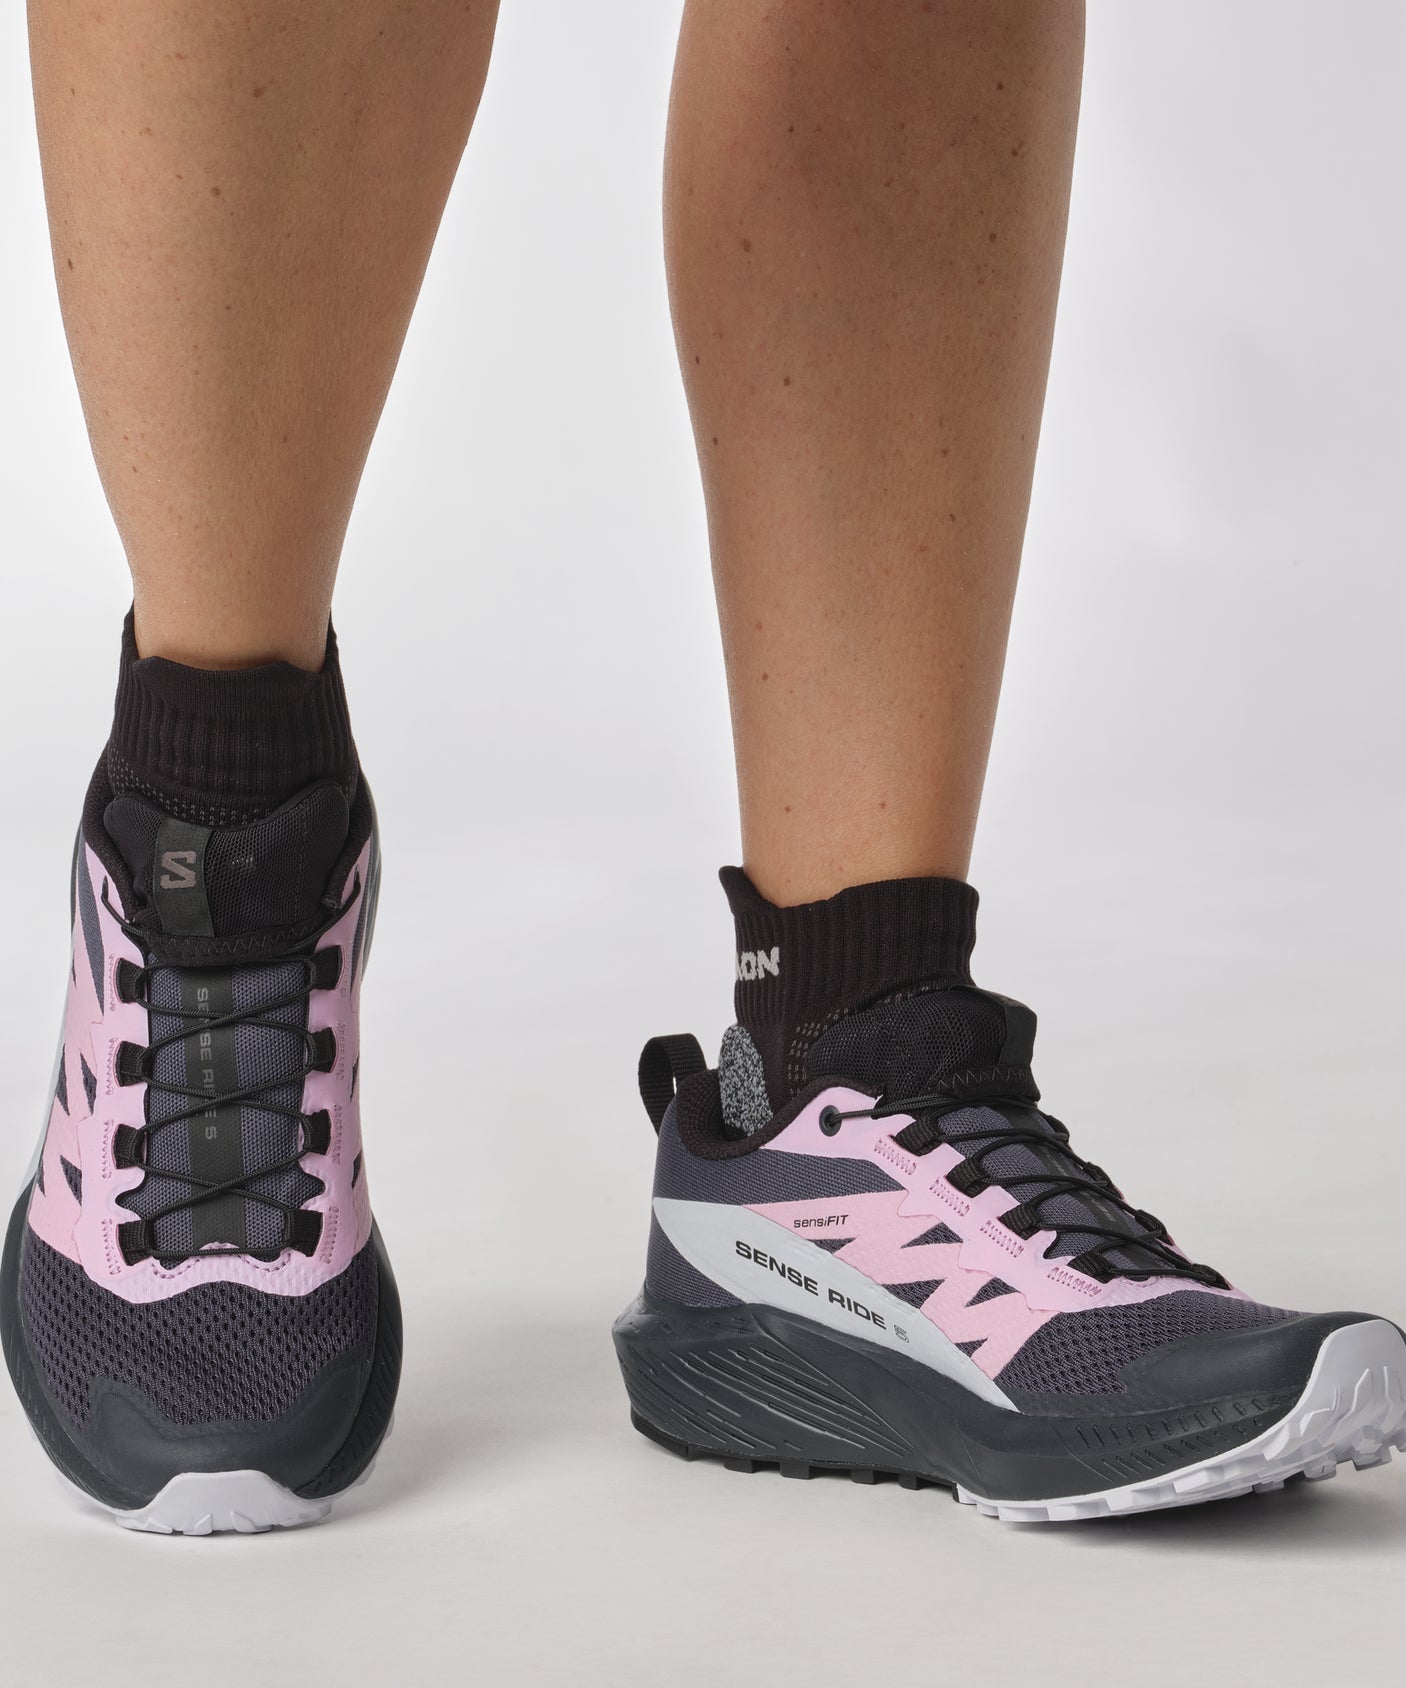 Salomon Women's SENSE RIDE 5 Trail Running Shoes for